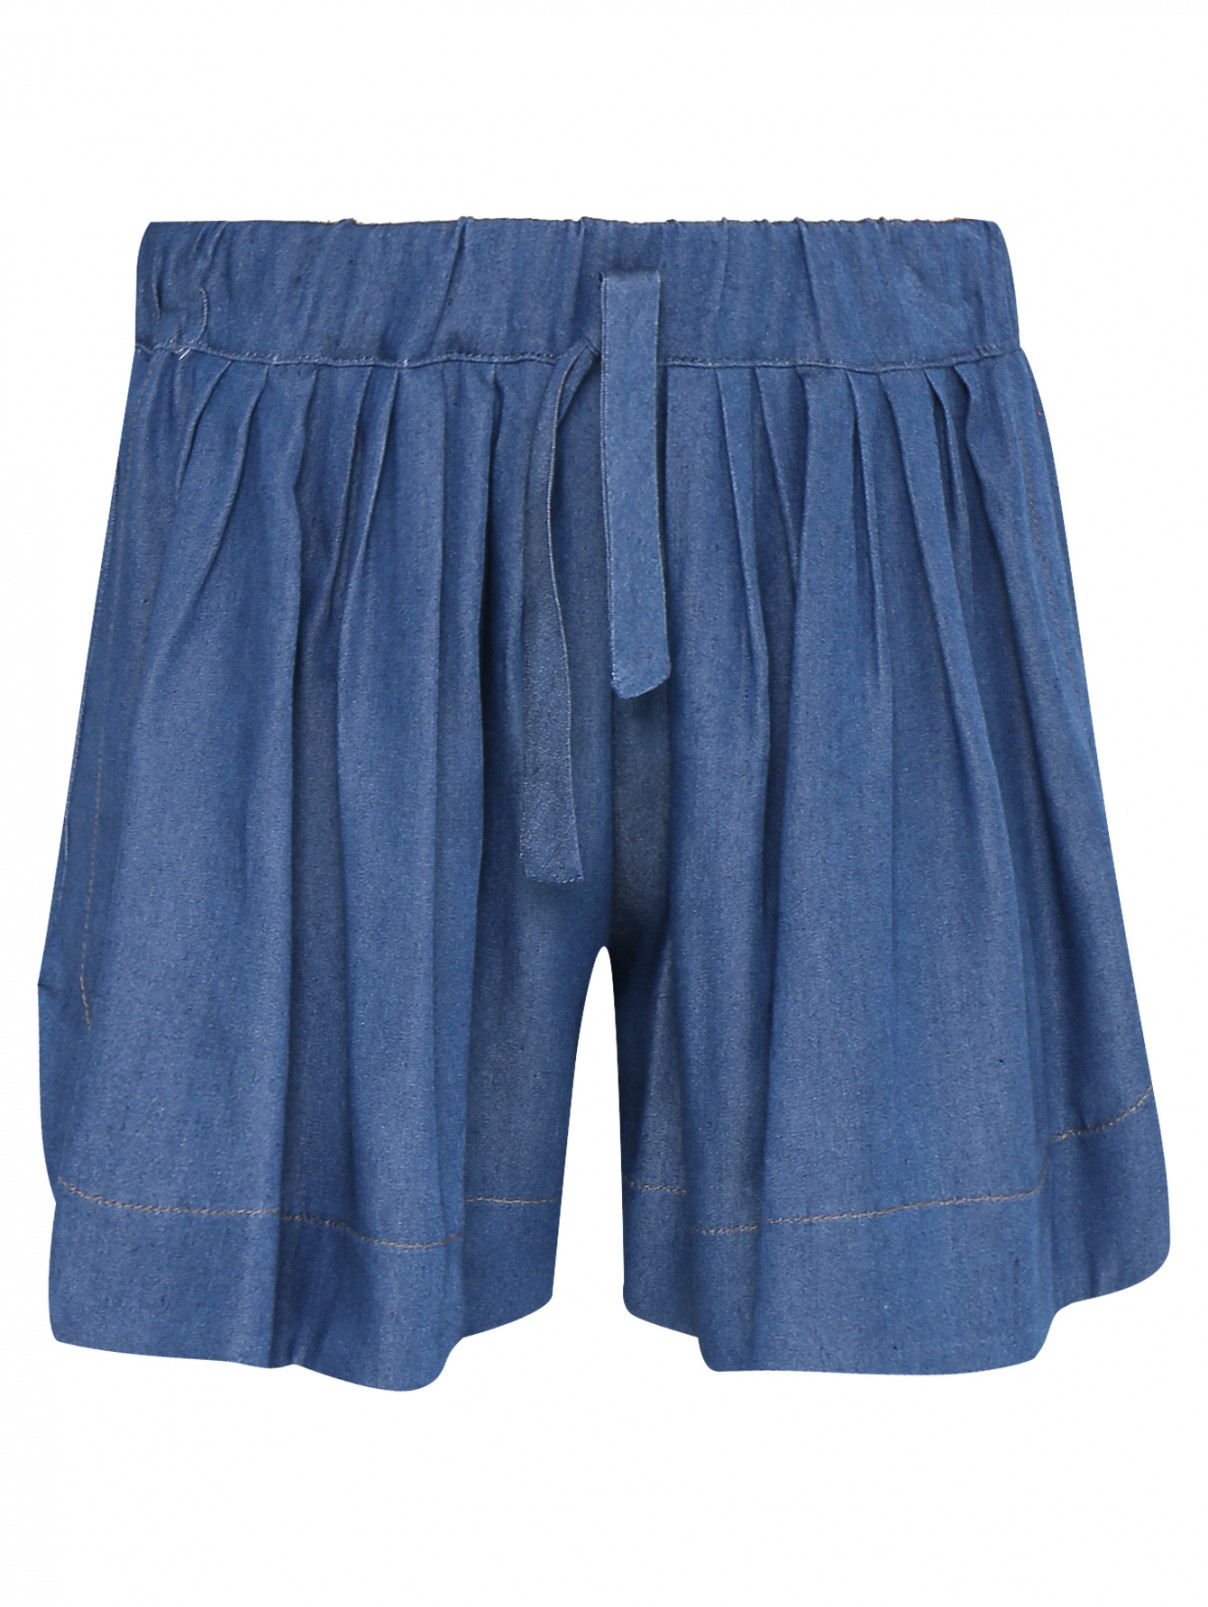 Юбка-шорты из вискозы Aletta  –  Общий вид  – Цвет:  Синий